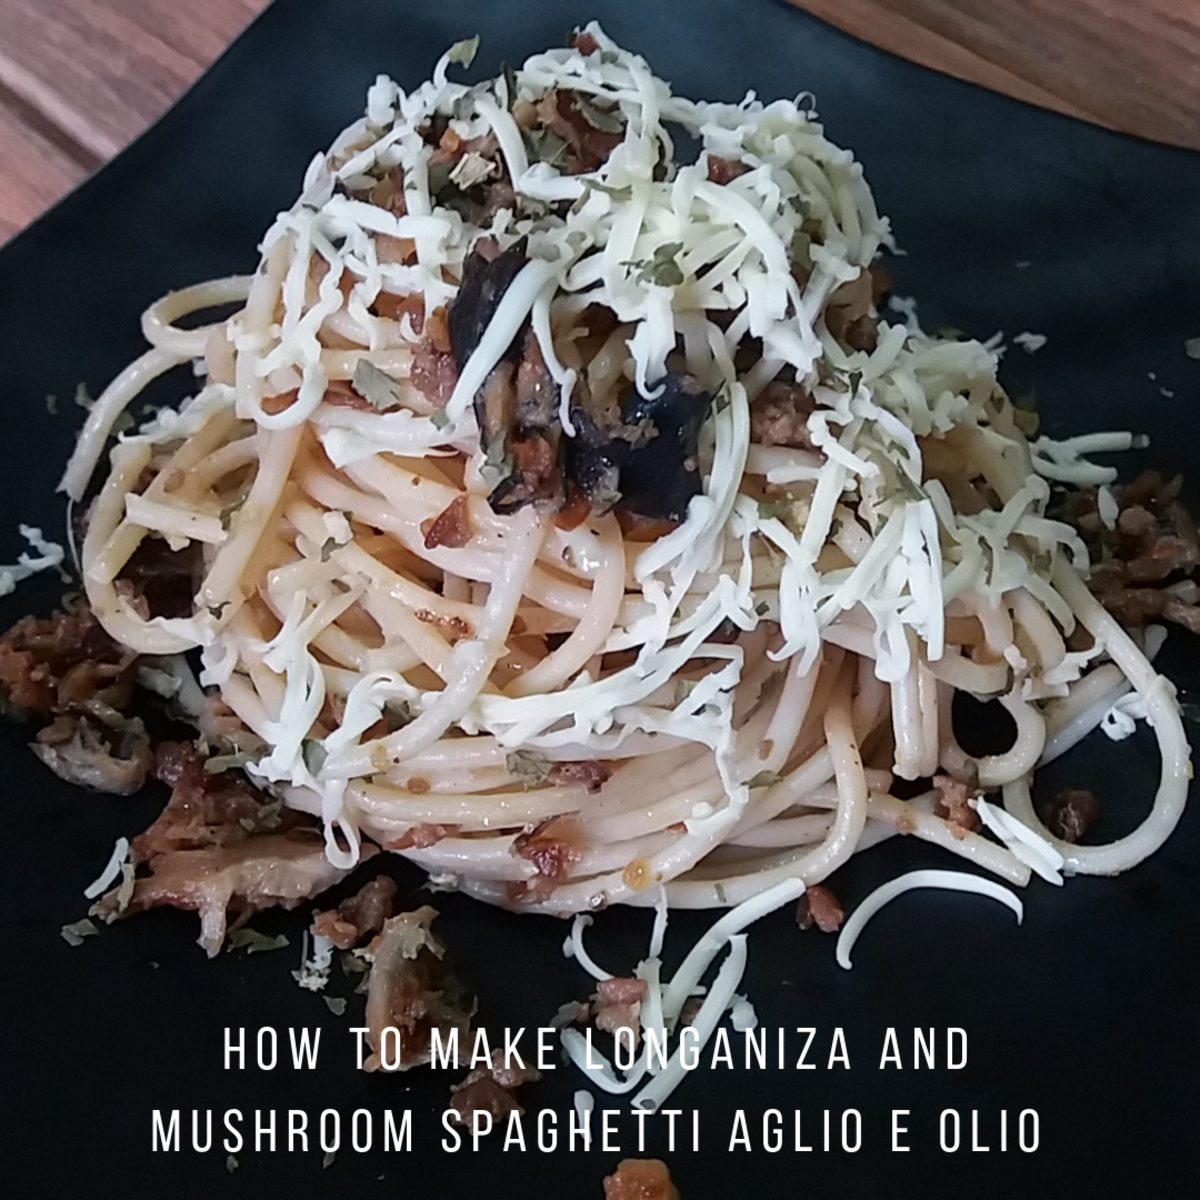 Make longaniza and mushroom spaghetti Aglio e olio with this easy-to-follow recipe. 